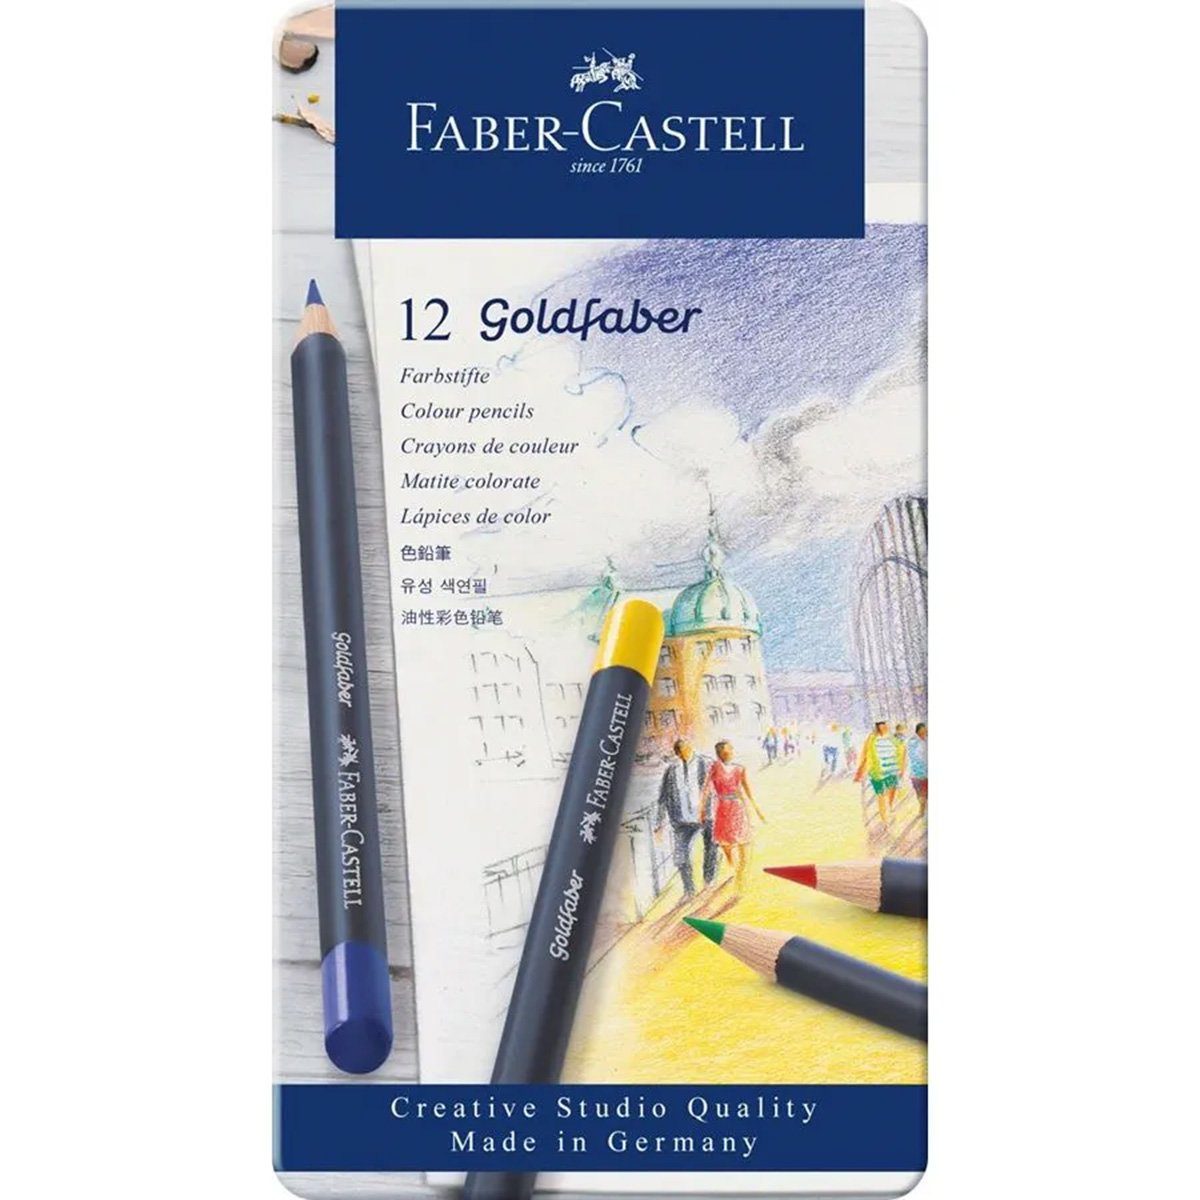 Goldfaber Buntstift Farbstift Metalletui Faserstift 12er Faber-Castell